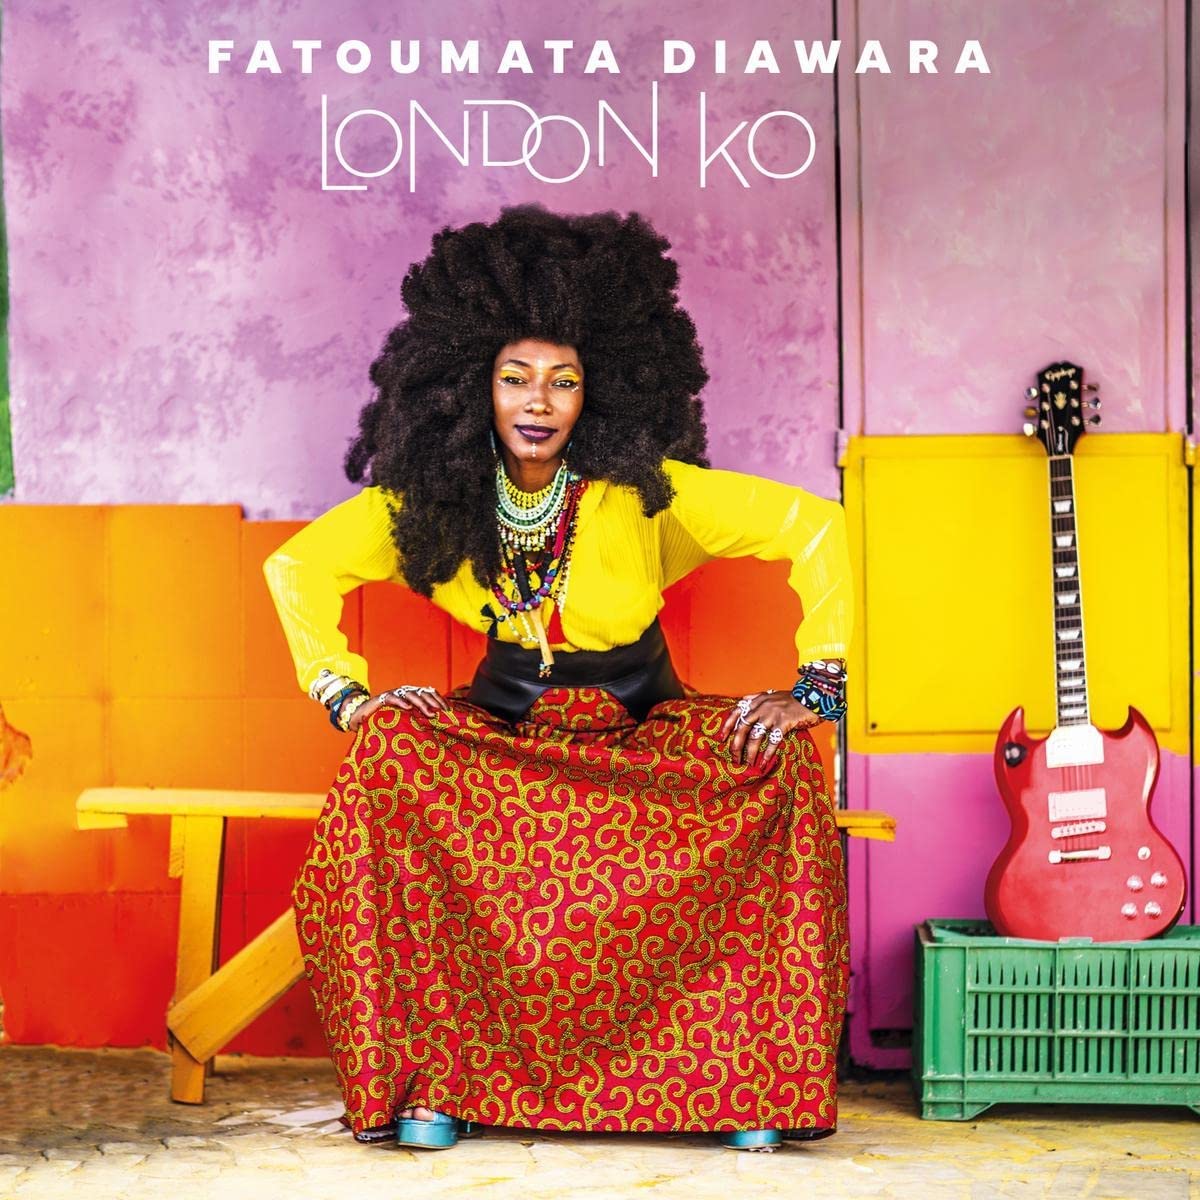 Diawara, Fatoumata London Ko